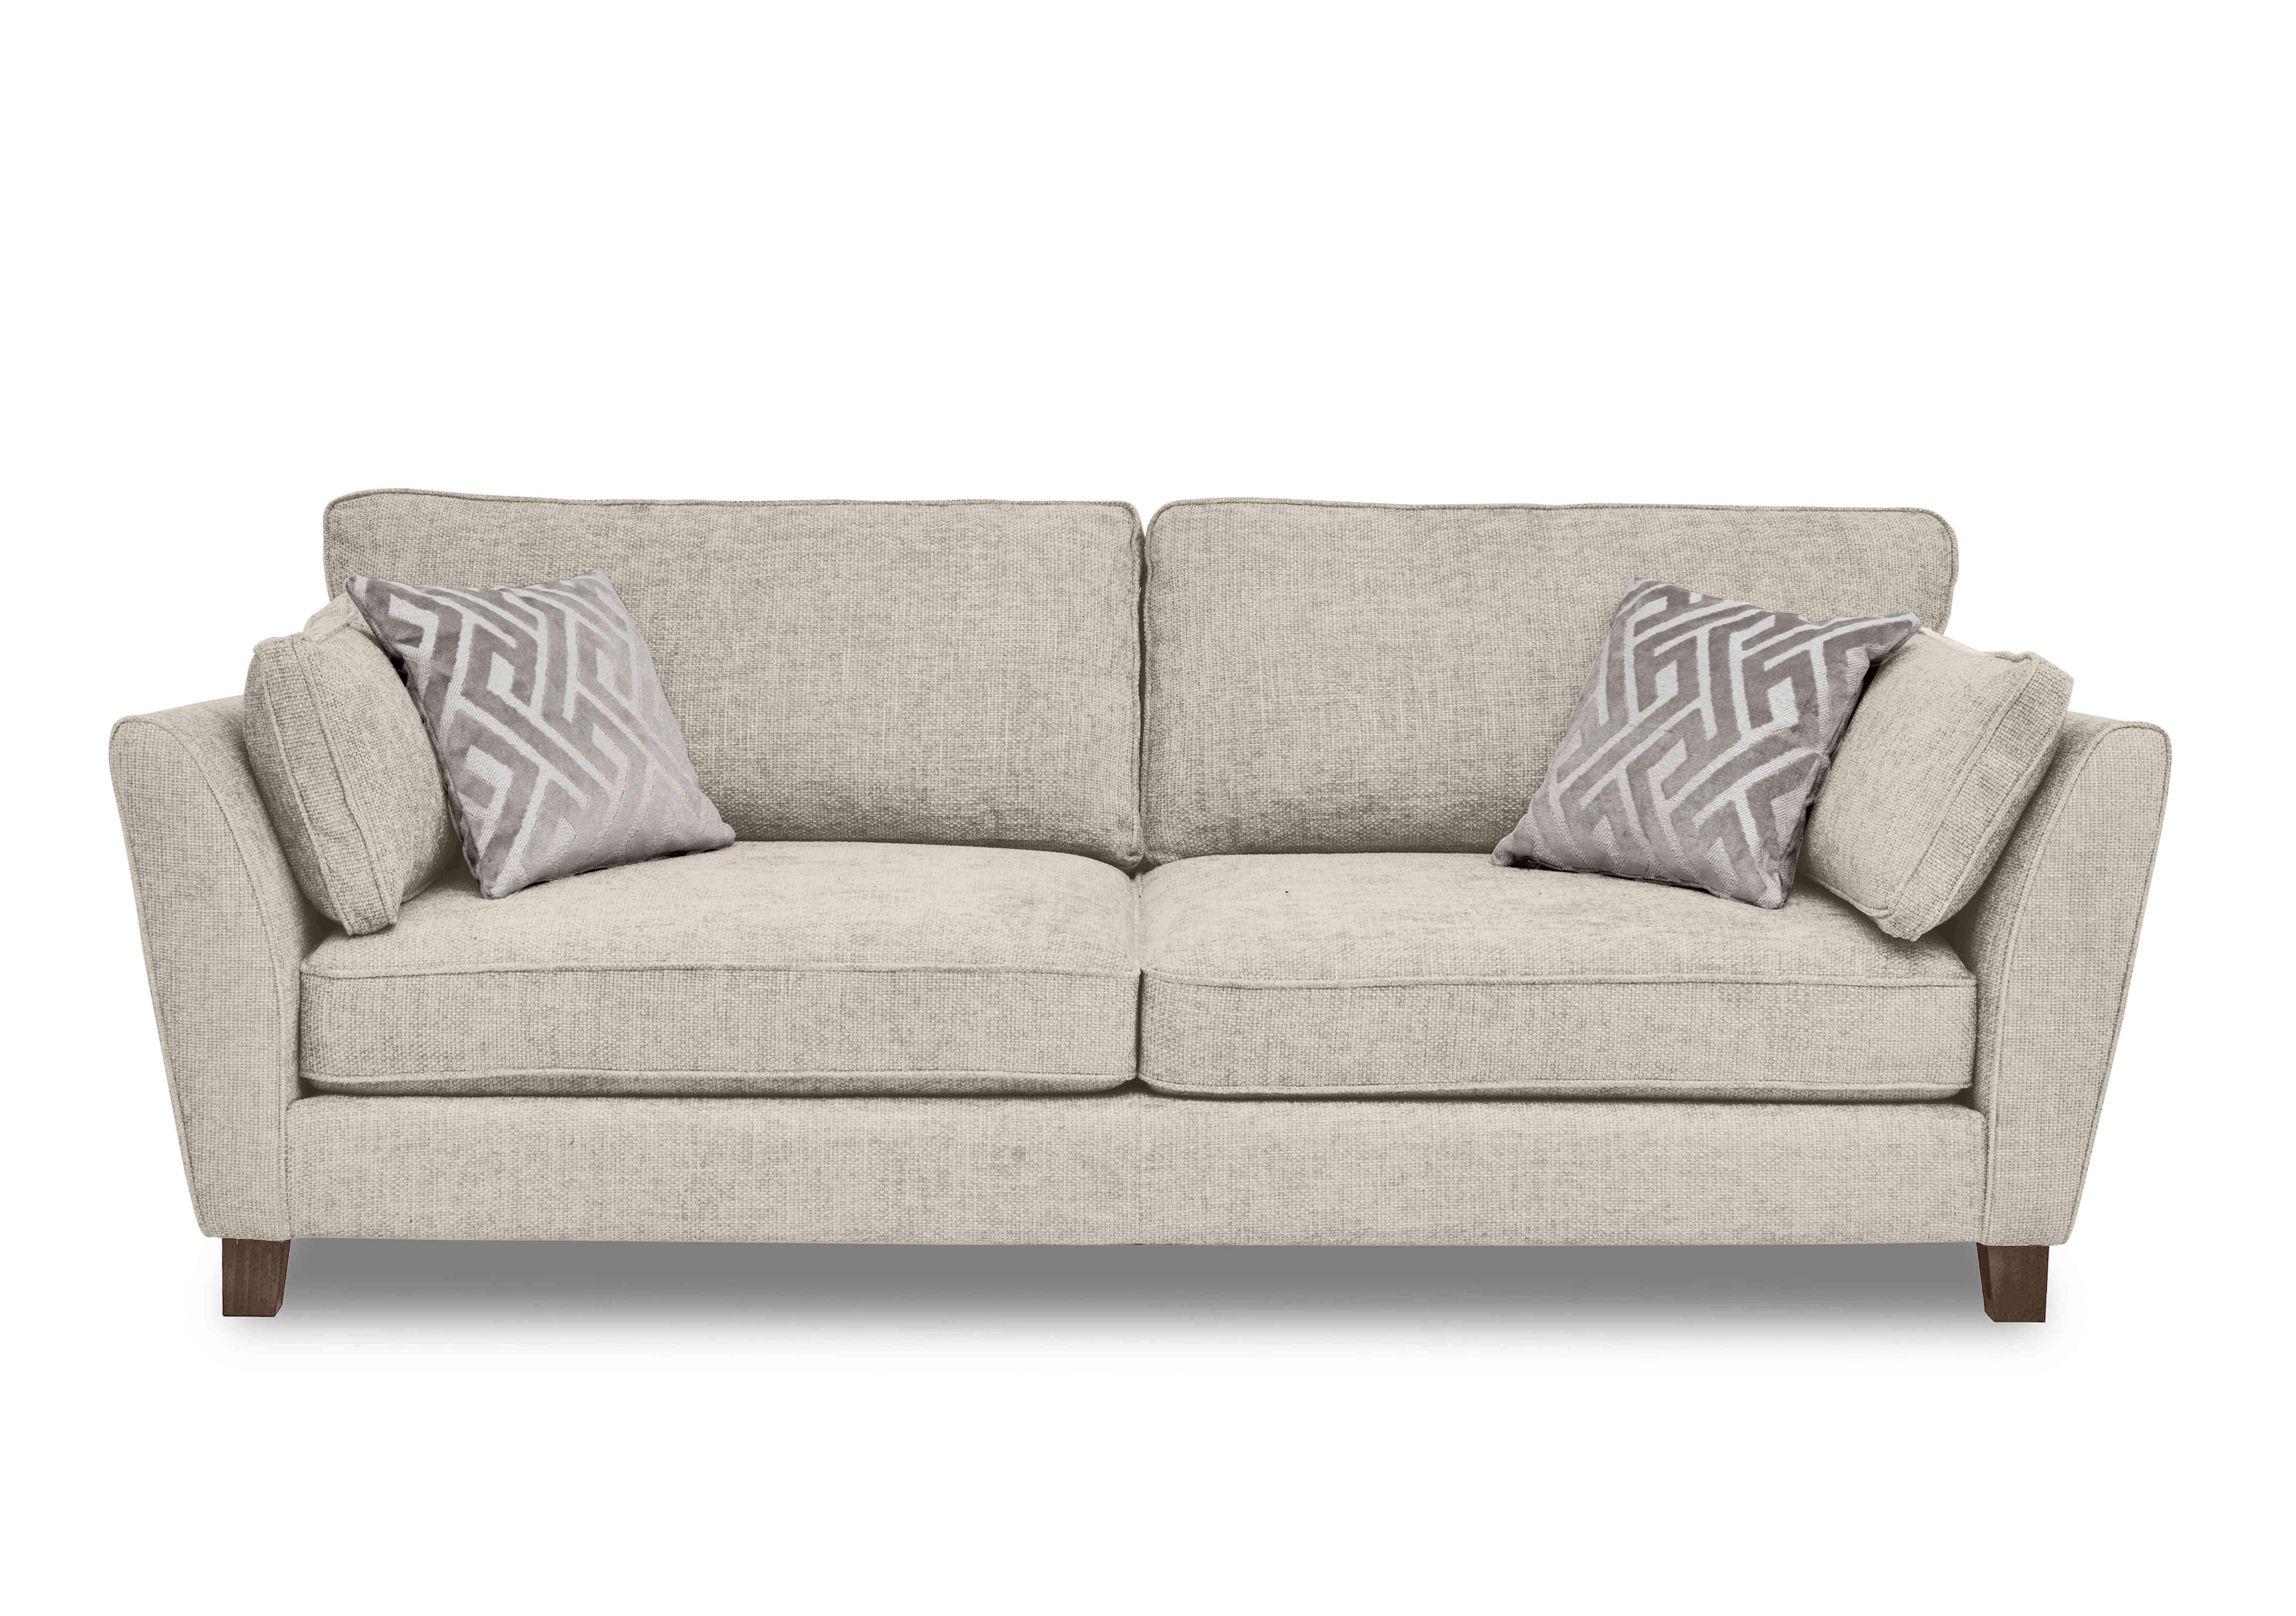 Tabitha 4 Seater Sofa in Cream on Furniture Village